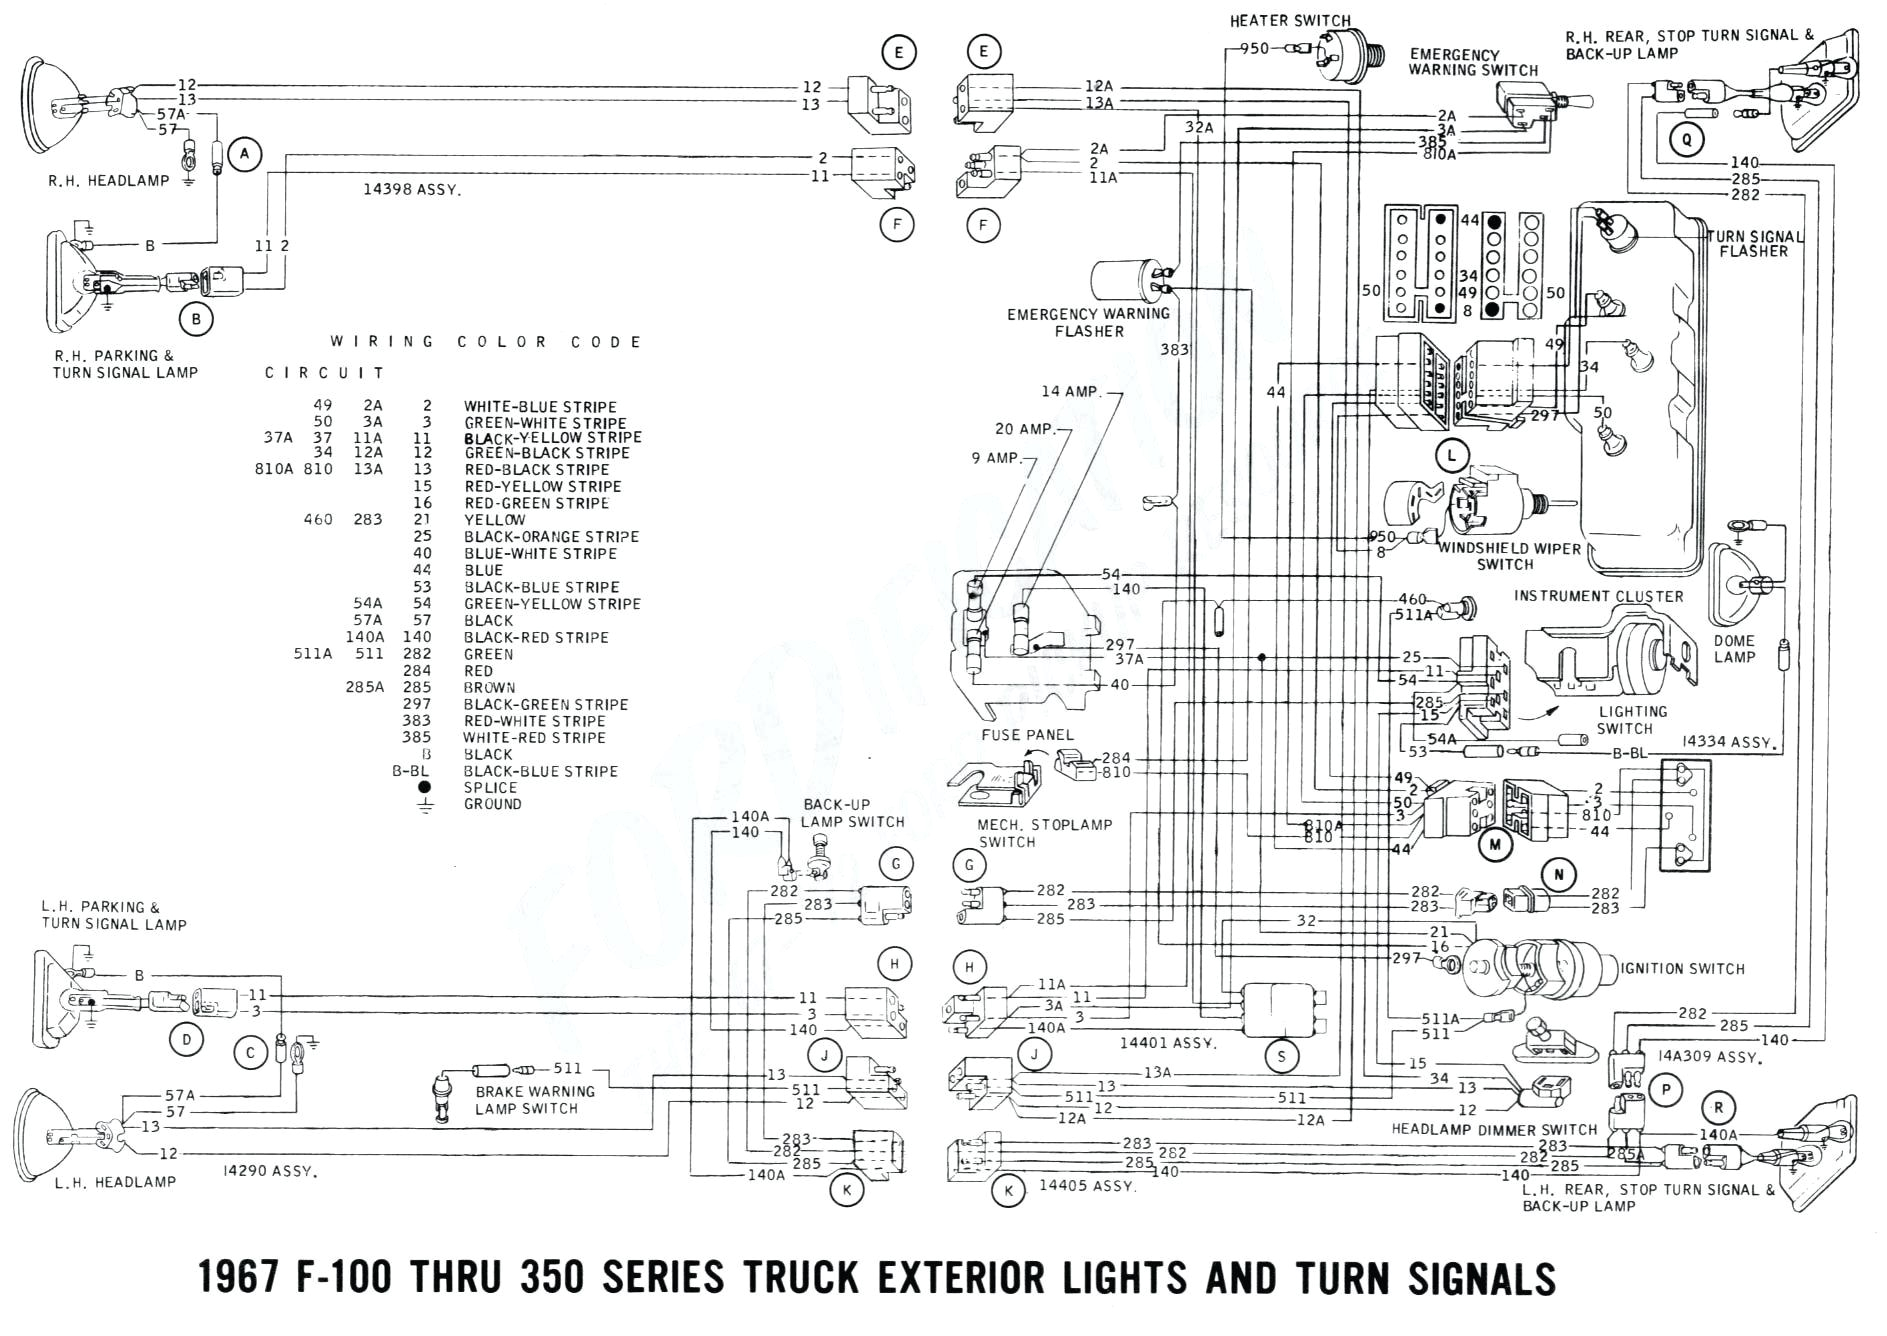 Turn Signal Wiring Diagram Chevy Truck 1955 Chevy Turn Signal Wiring Diagram Free Download Wiring Diagram